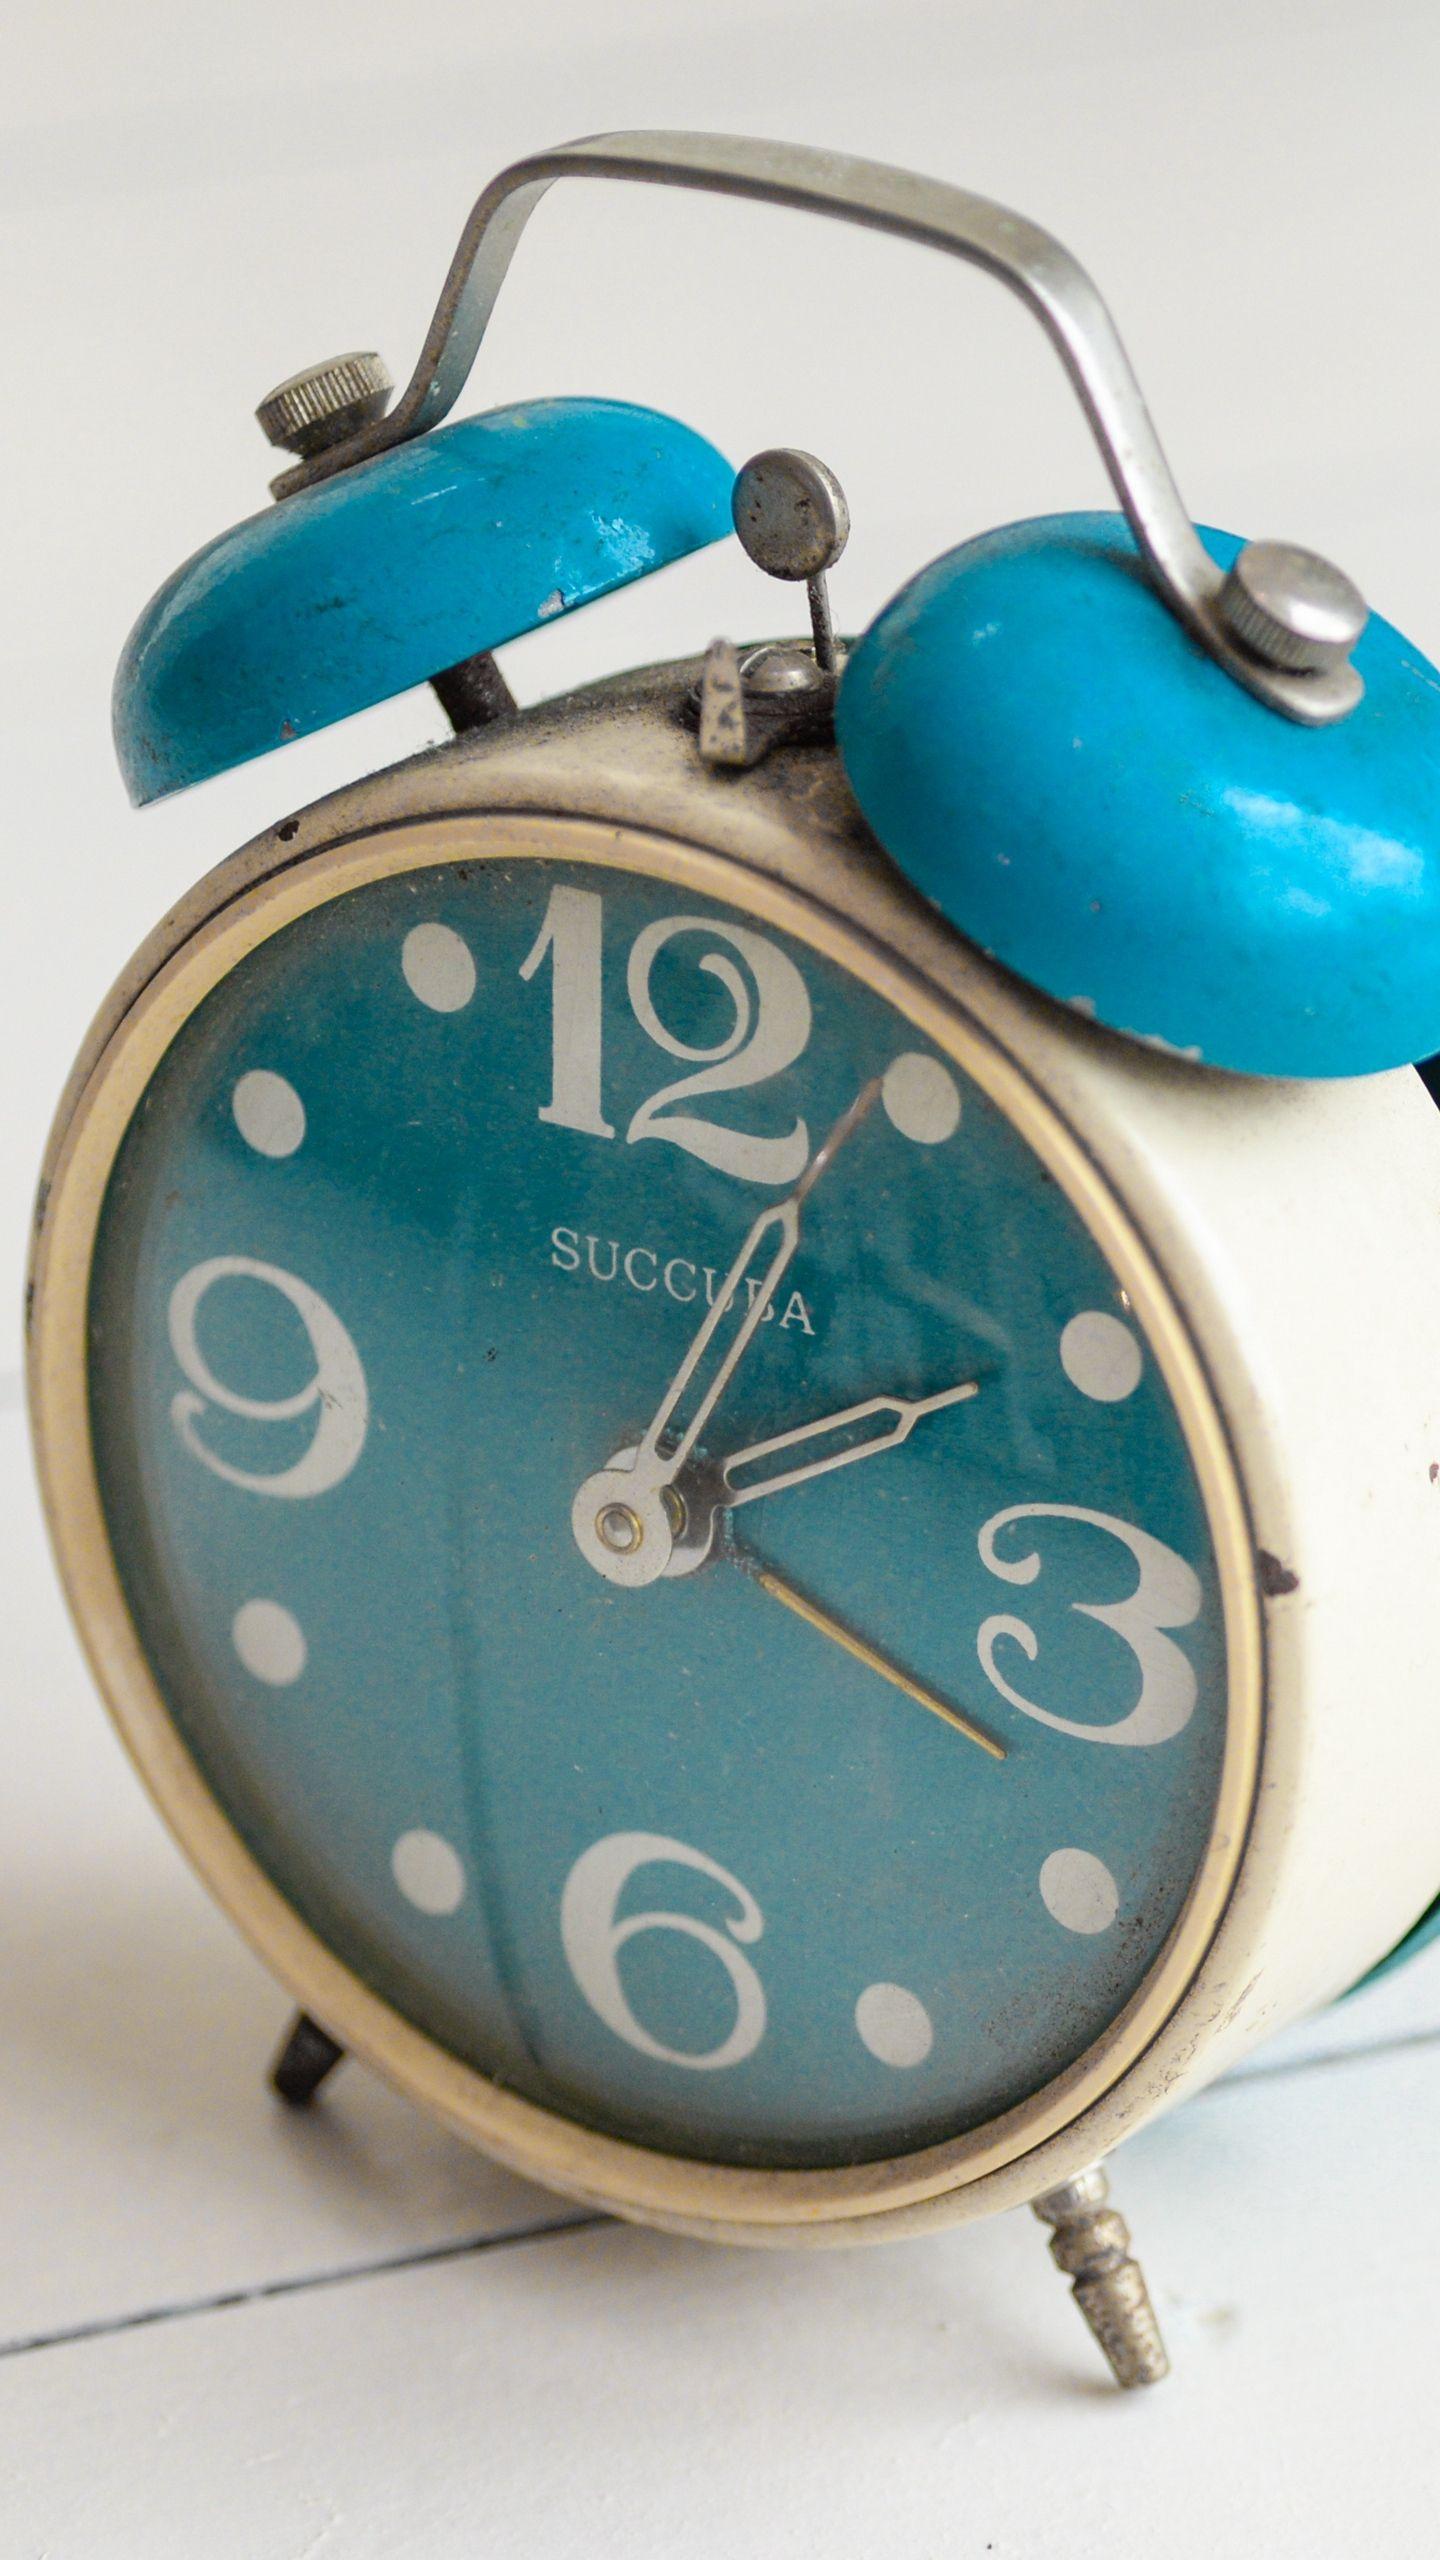 Download wallpaper 1440x2560 alarm clock, watch, vintage qhd samsung